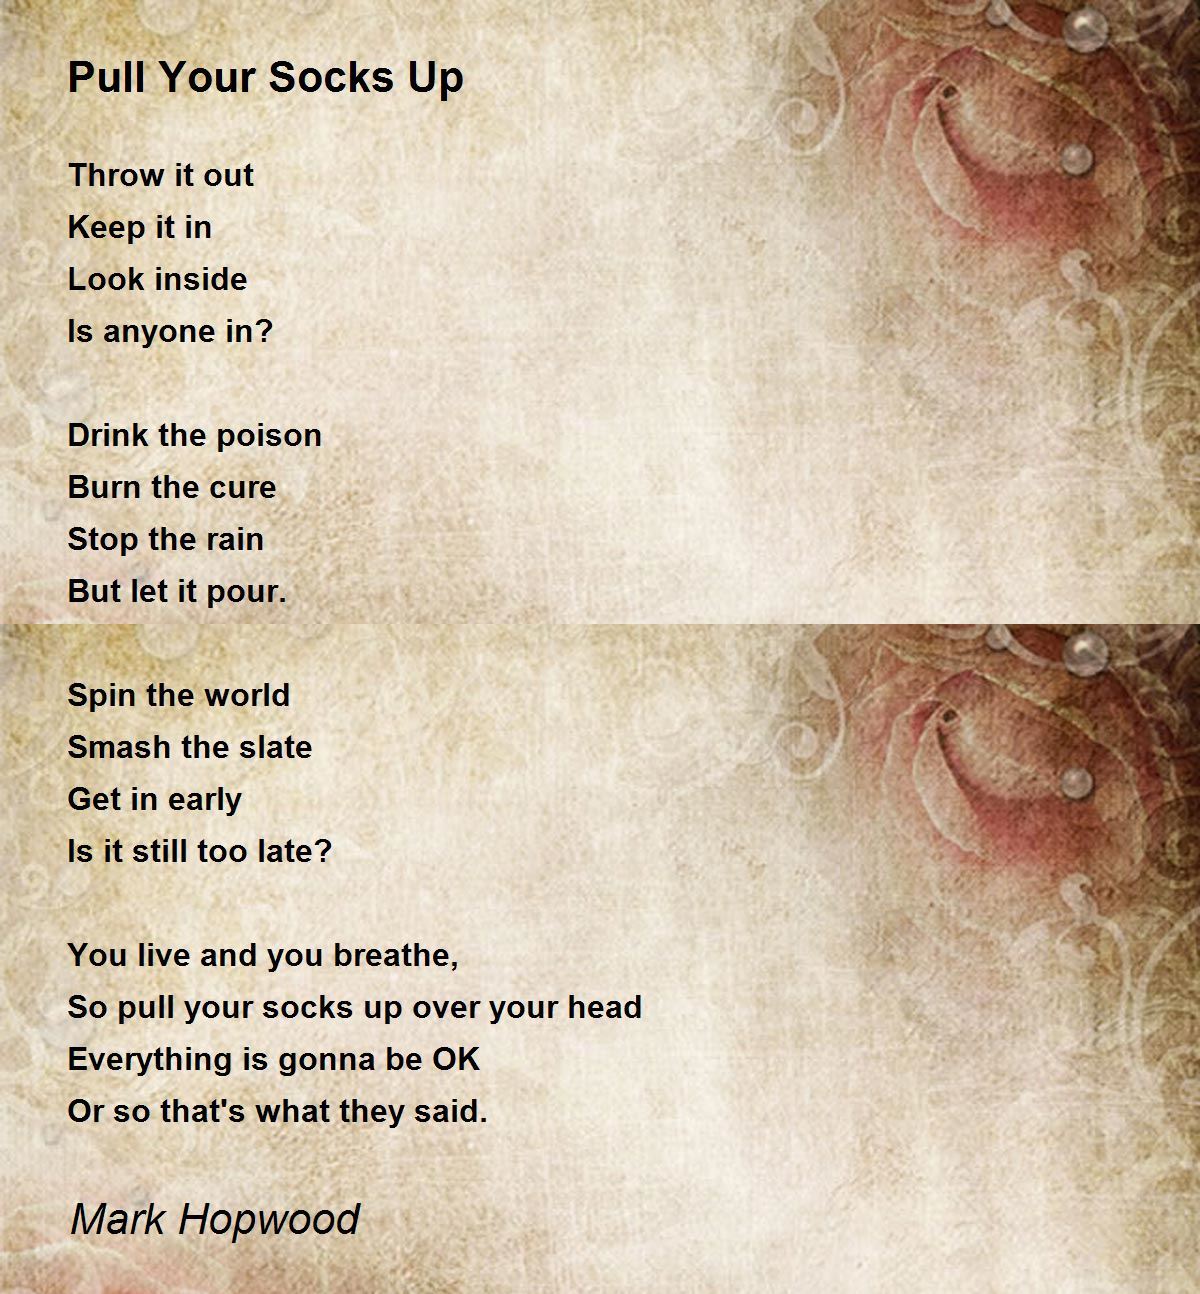 Pull Your Socks Up - Pull Your Socks Up Poem By Mark Hopwood